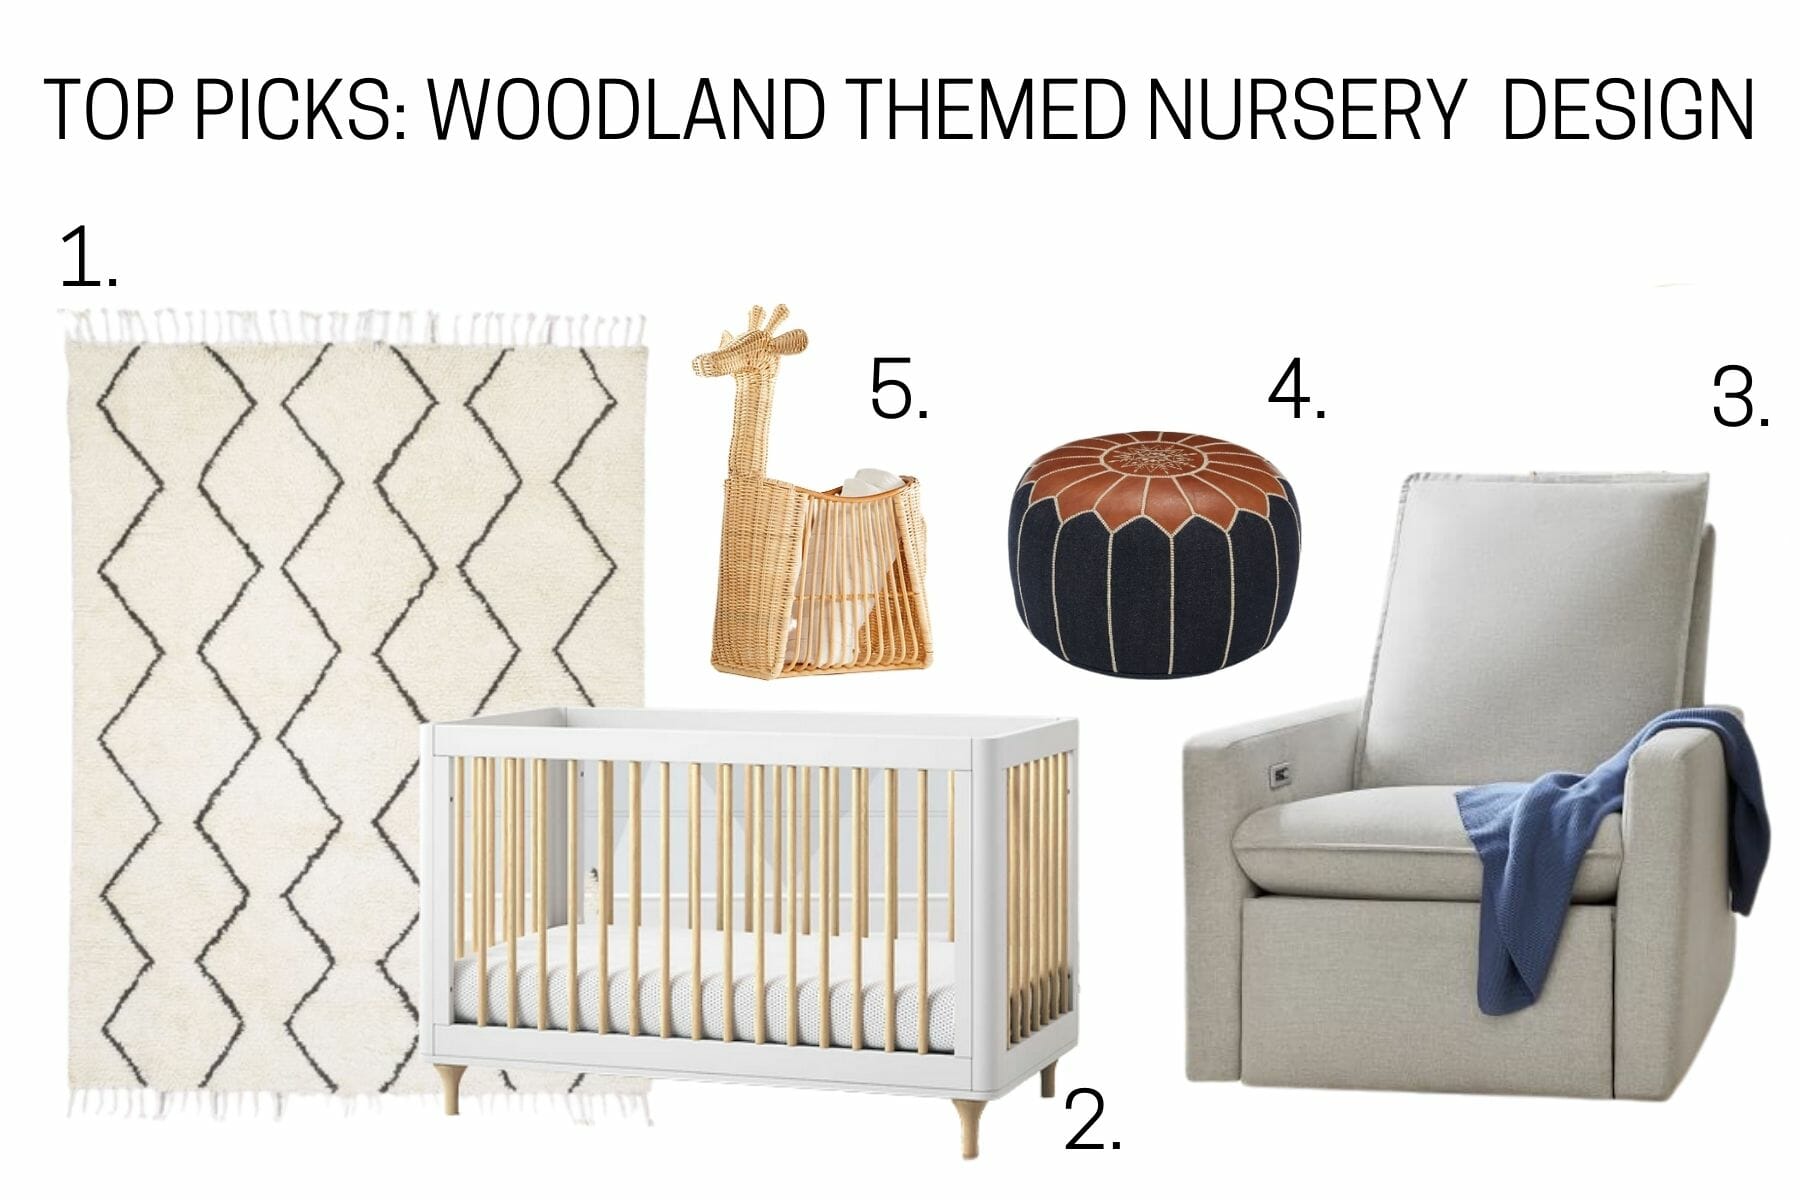 Woodland themed nursery top picks